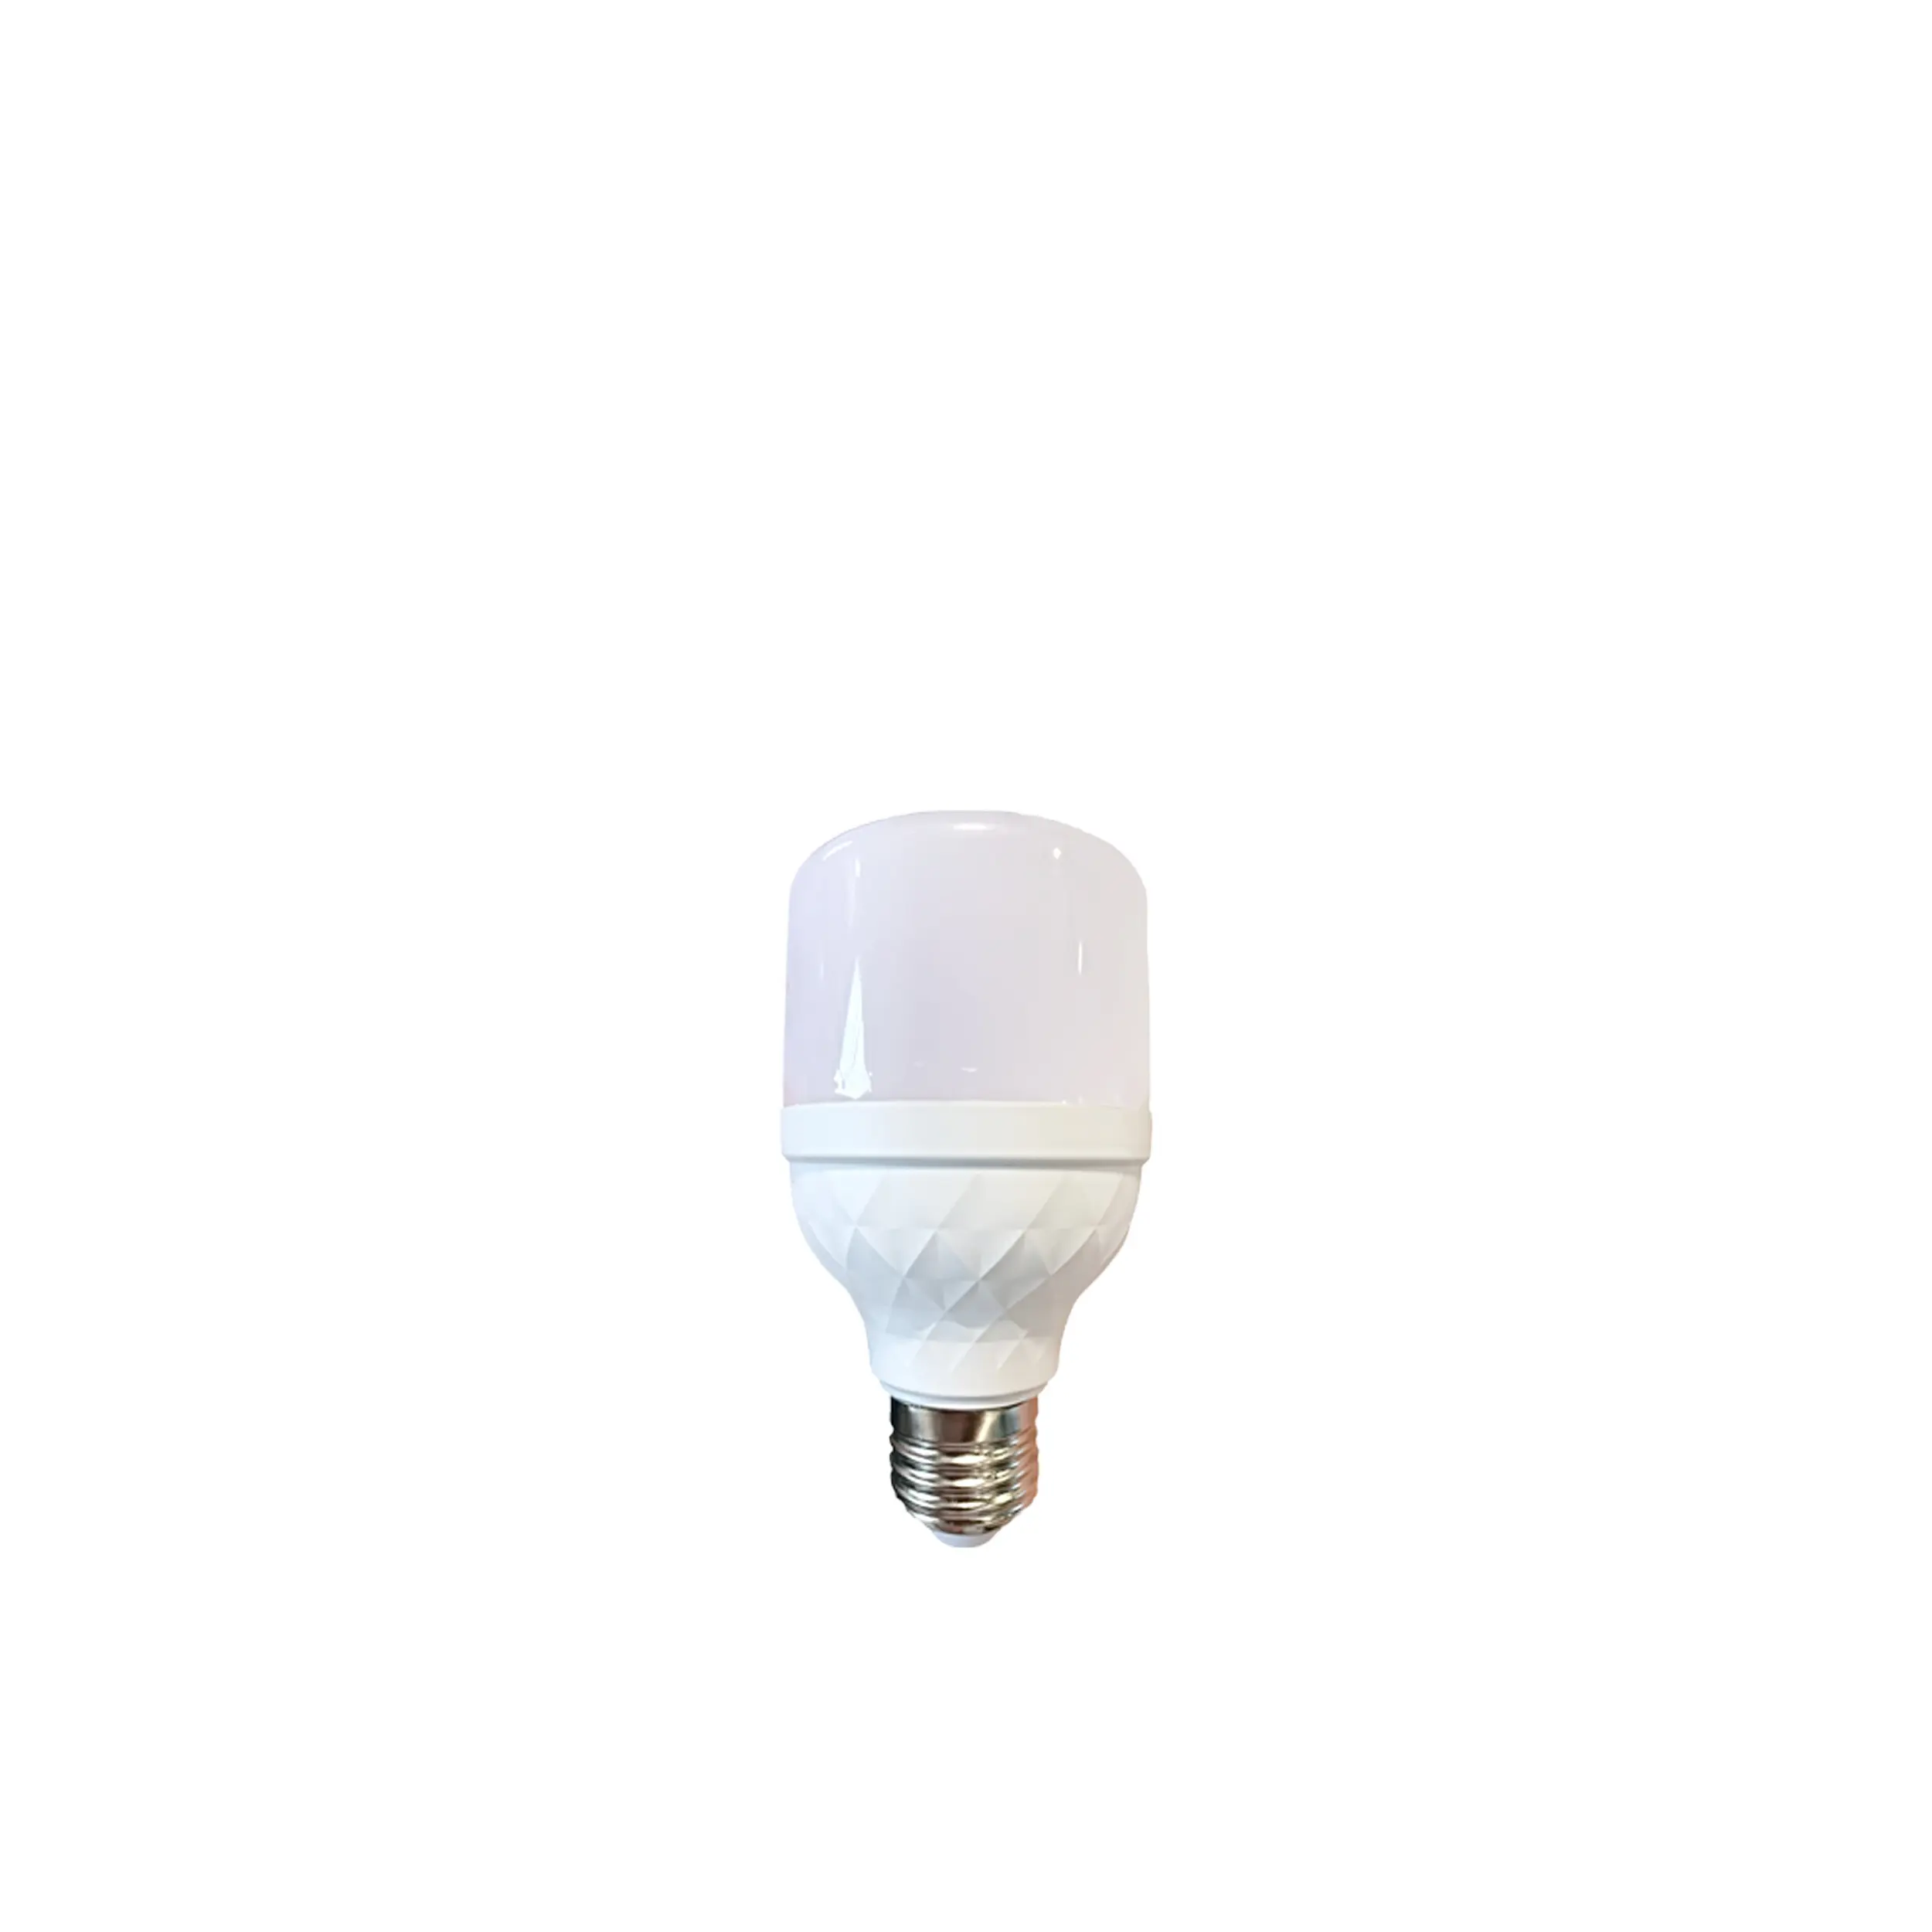 2020 factory Hot Sale Highlight Lamp Wholesale Latest Design Led T Bulb 5w  10w  15w  20w  30w  40w  50w